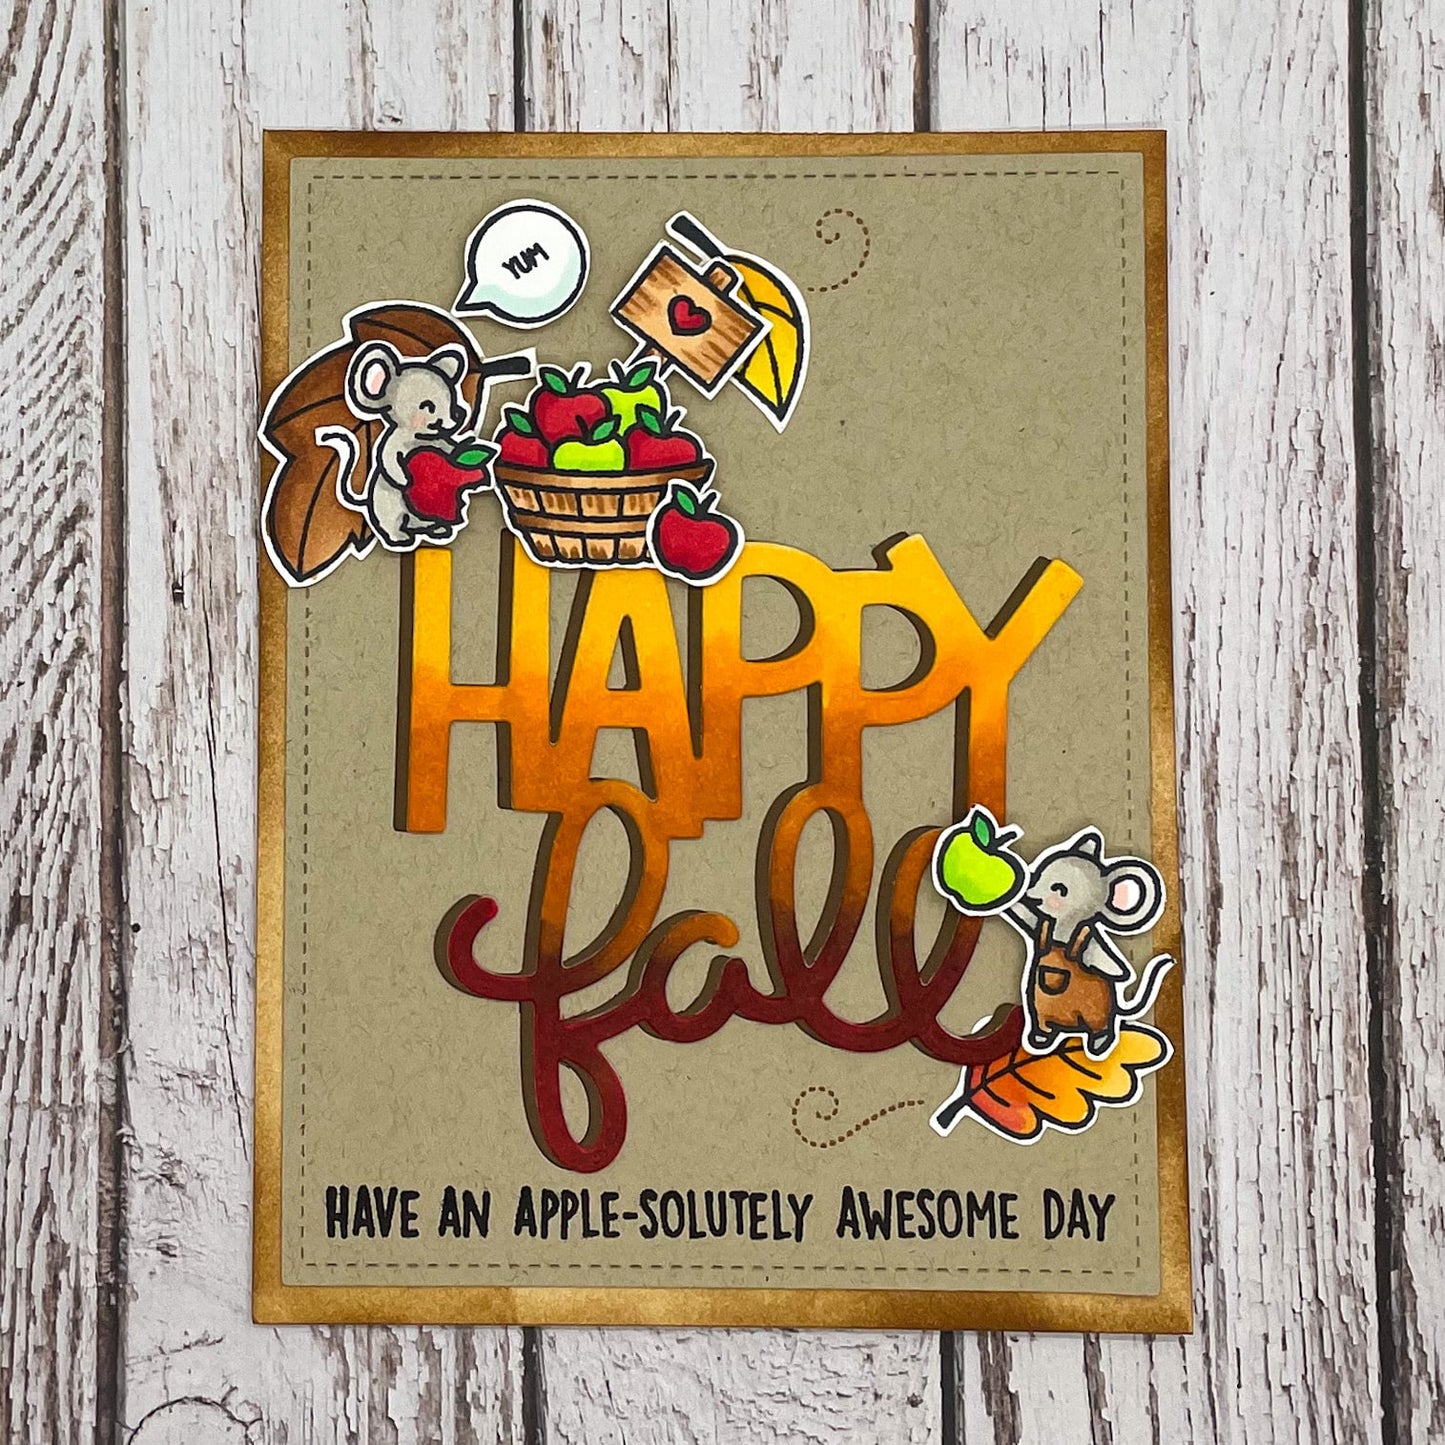 Apple-solutley Awesome Day Autumn Themed Handmade Card